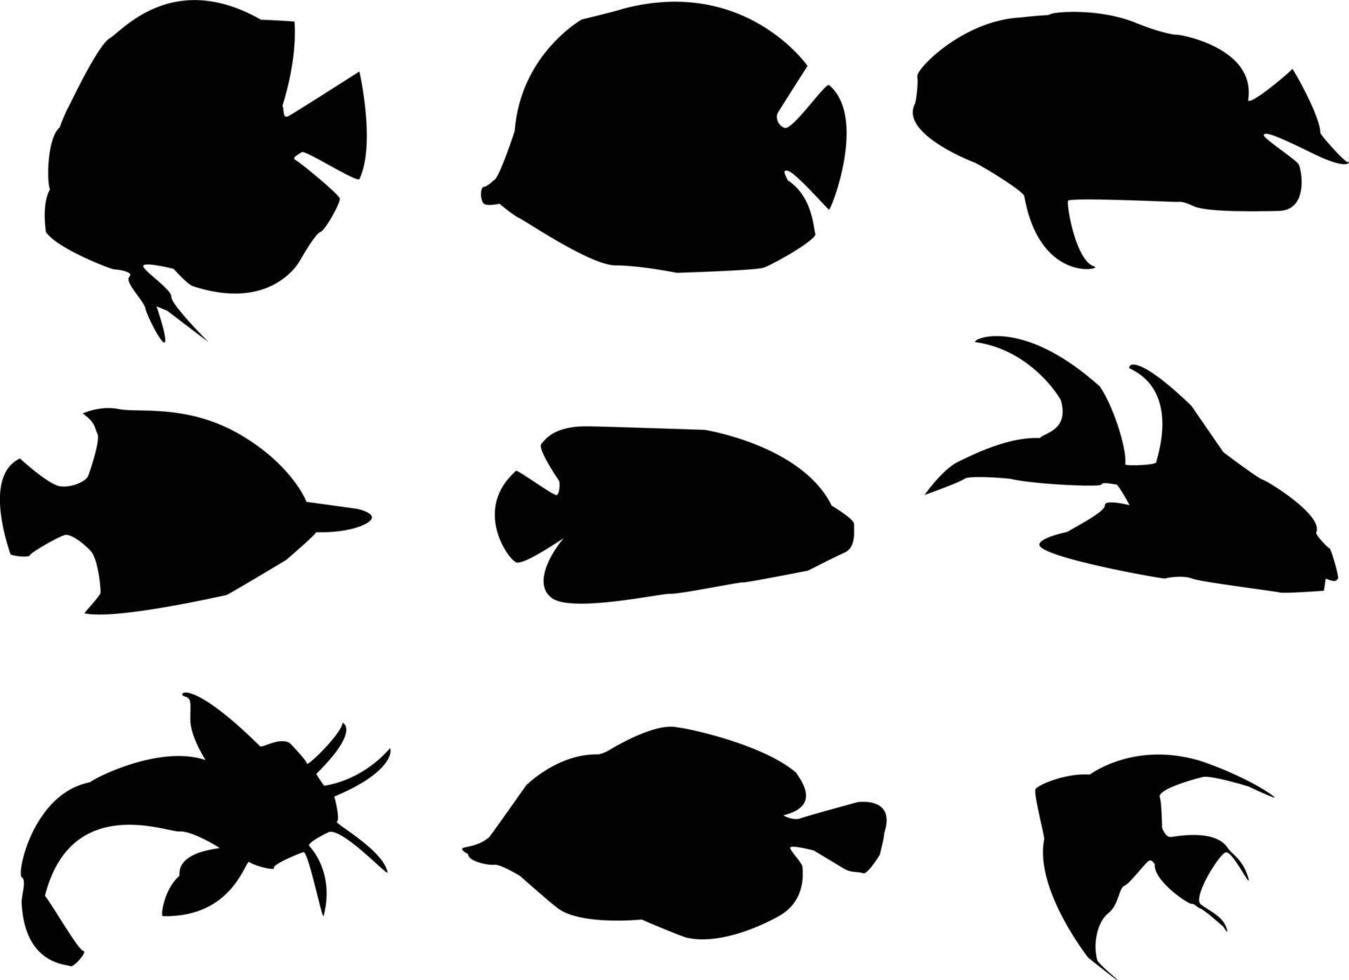 Creative, Amazing and Original Fishing  silhouette vector